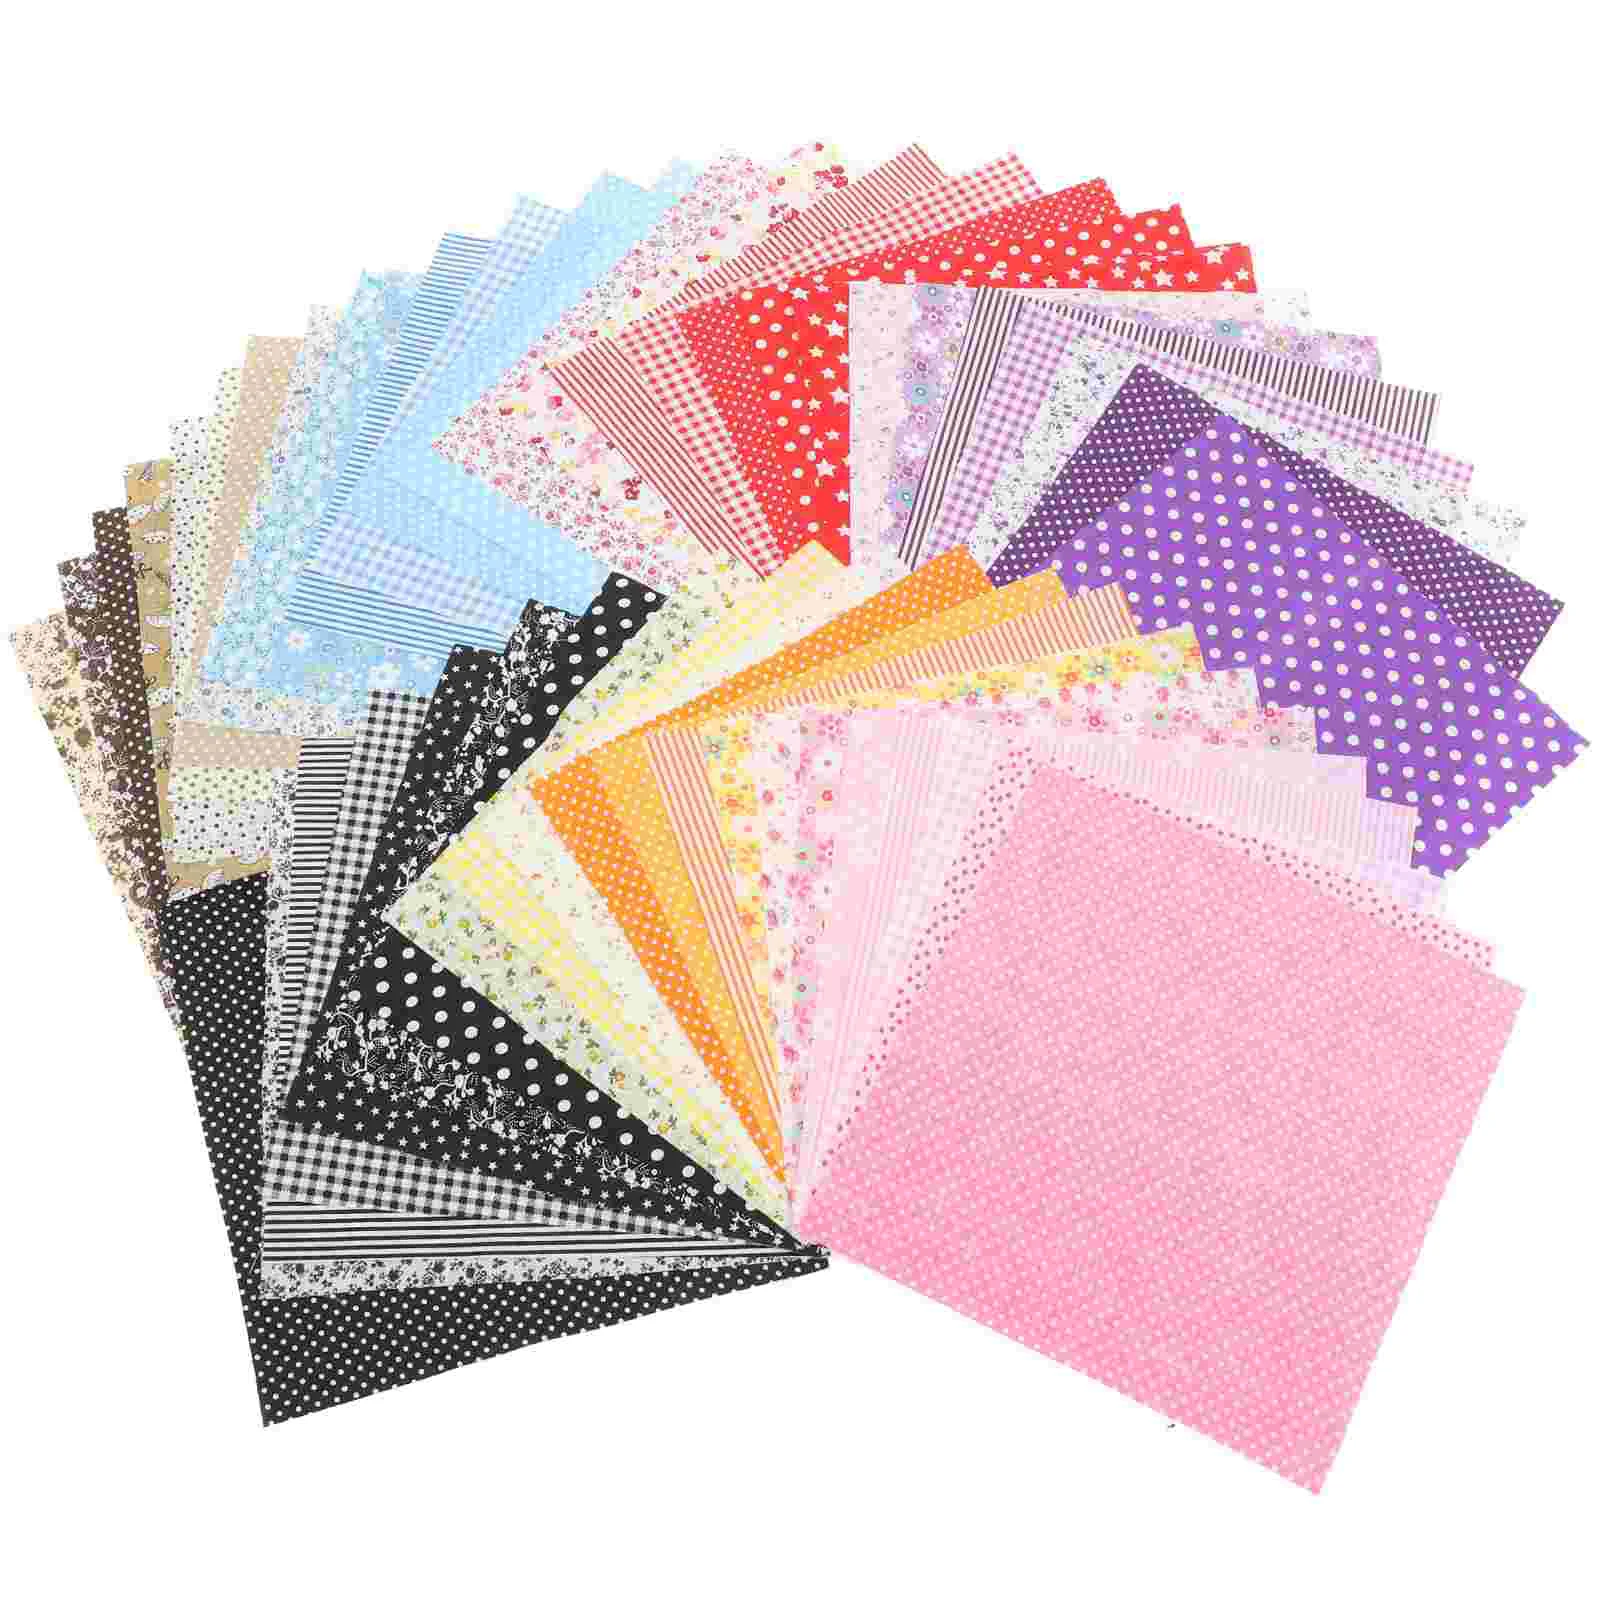 

Fabric Sewing Cotton Patchwork Floral Squares Quilting Sheets Diy Craft Bundles Crafting Printed Pattern Star Stripe Bundle Dot